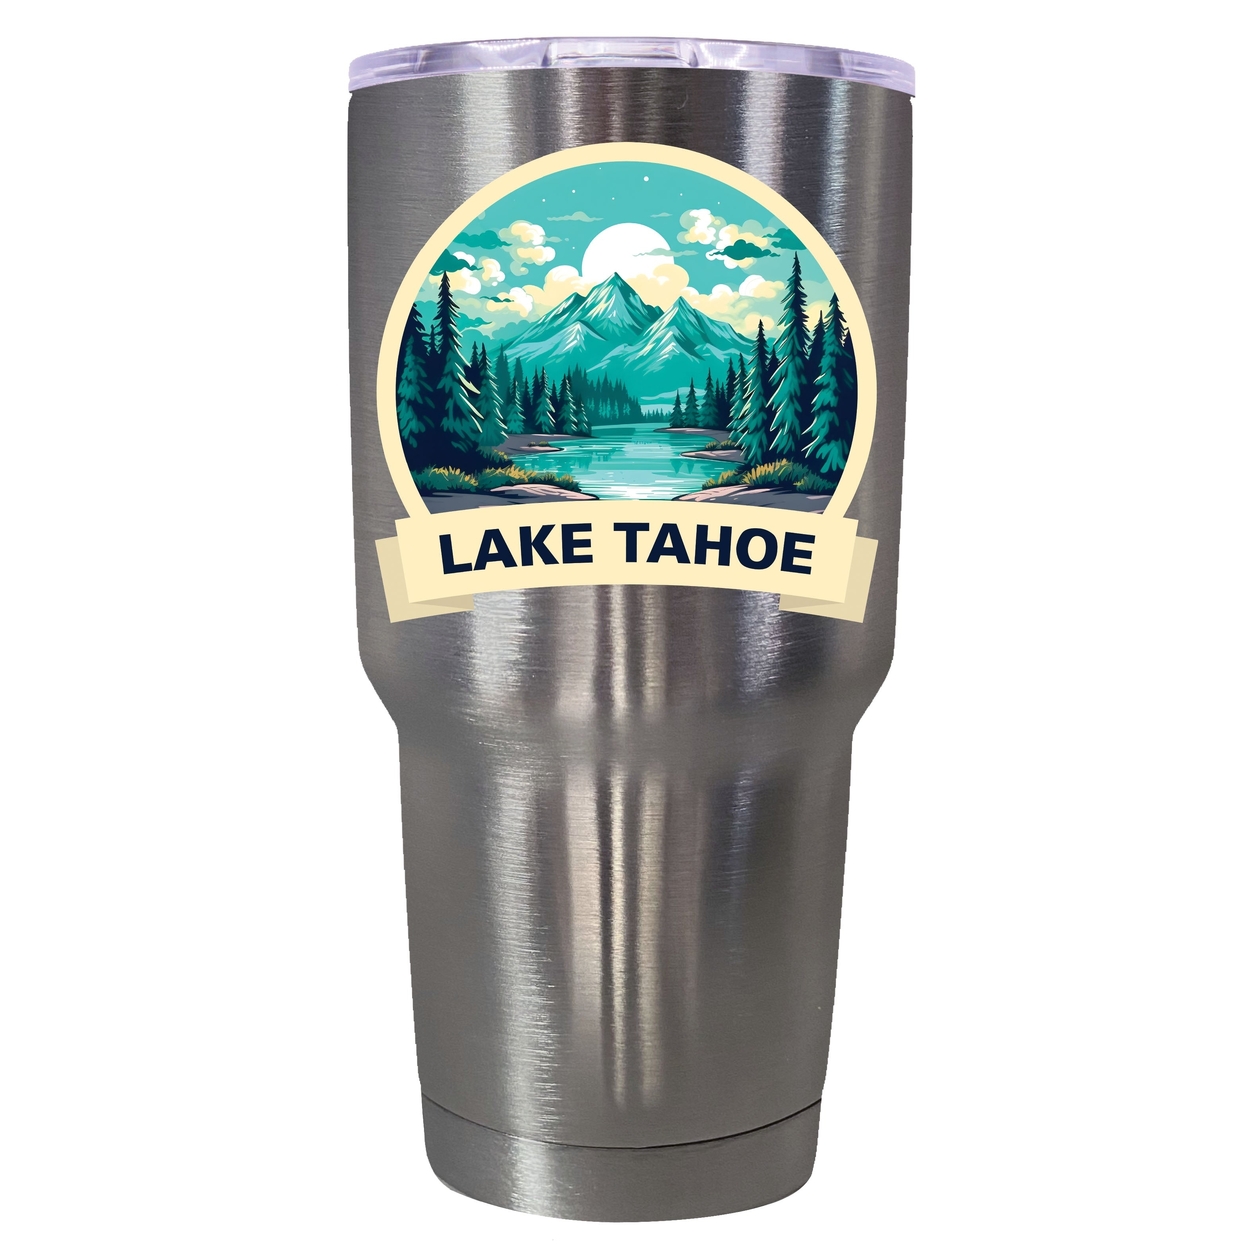 Lake Tahoe California Souvenir 24 Oz Insulated Stainless Steel Tumbler - Seafoam,,4-Pack